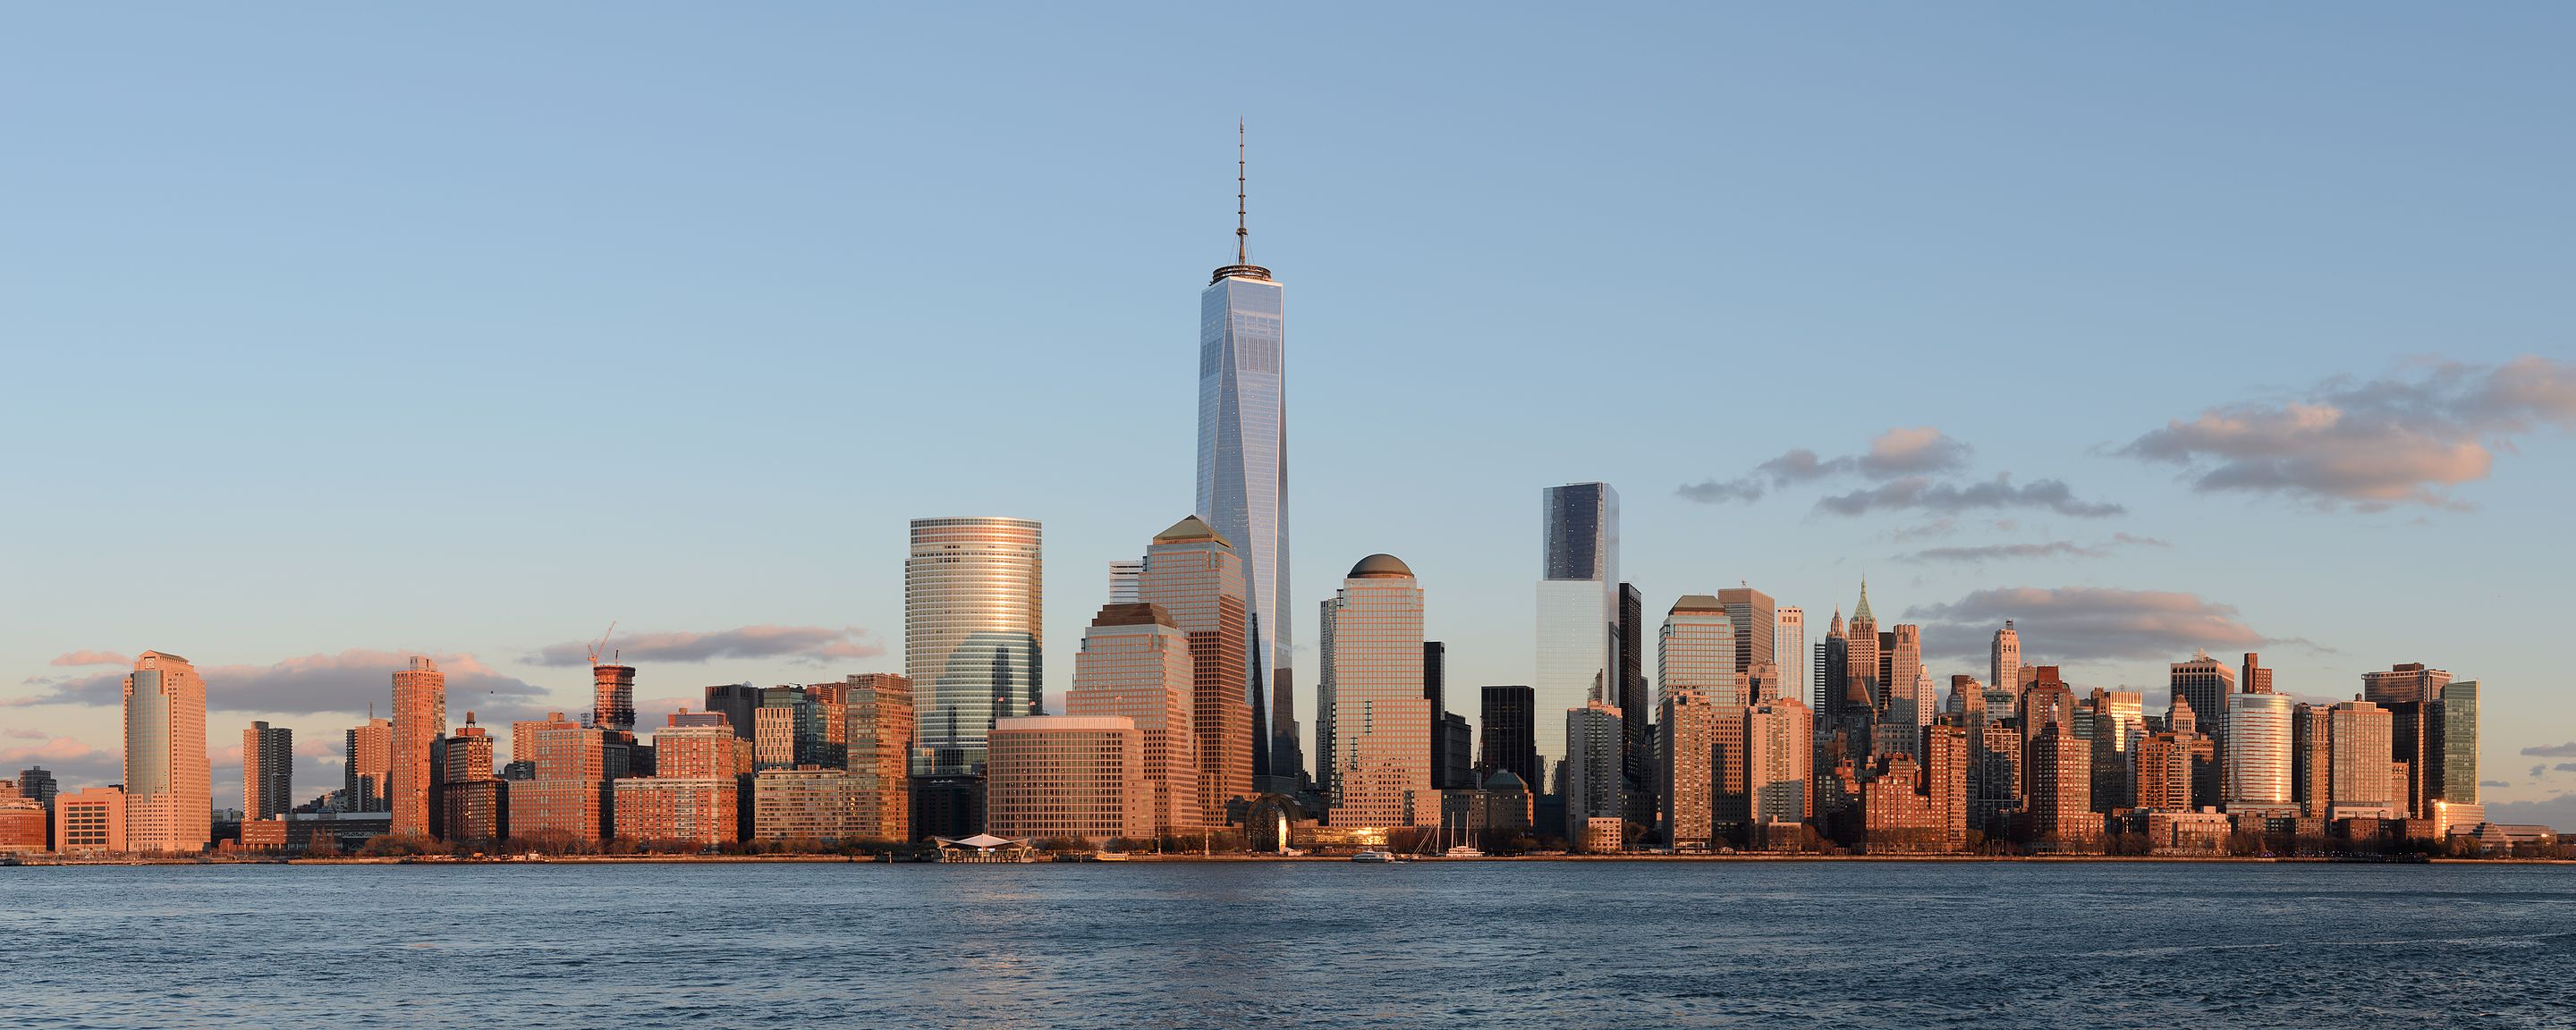 Japanese Mitsui Fudosan To Build $3.6bn Office Tower in Manhattan, New York